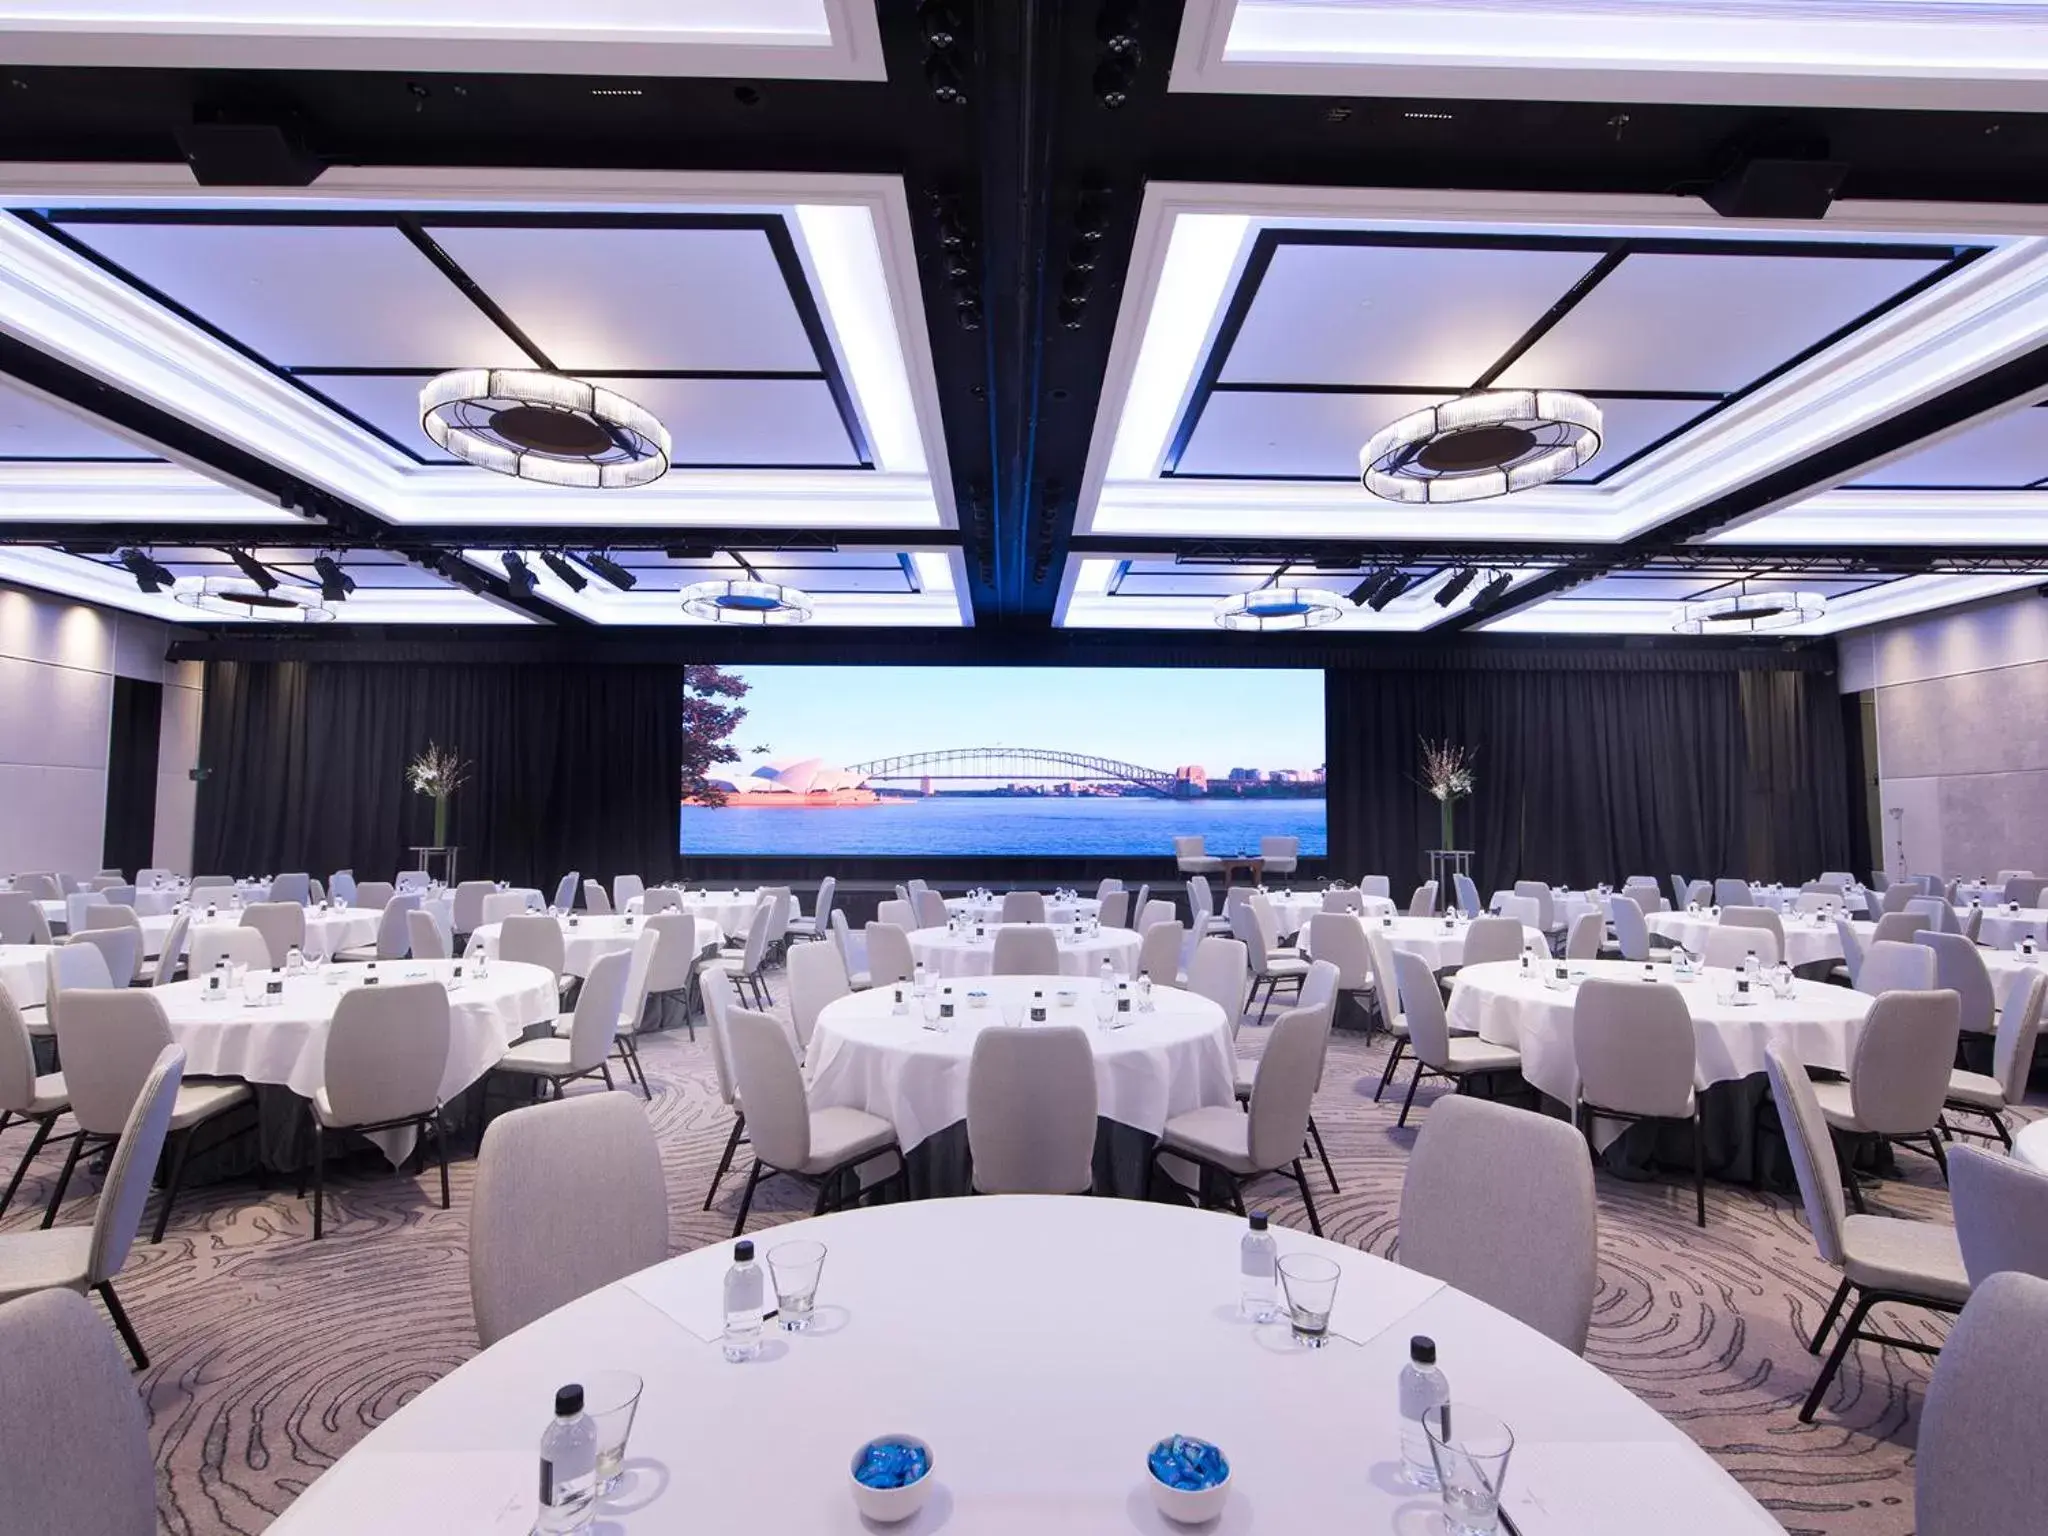 Banquet/Function facilities, Banquet Facilities in Four Seasons Hotel Sydney